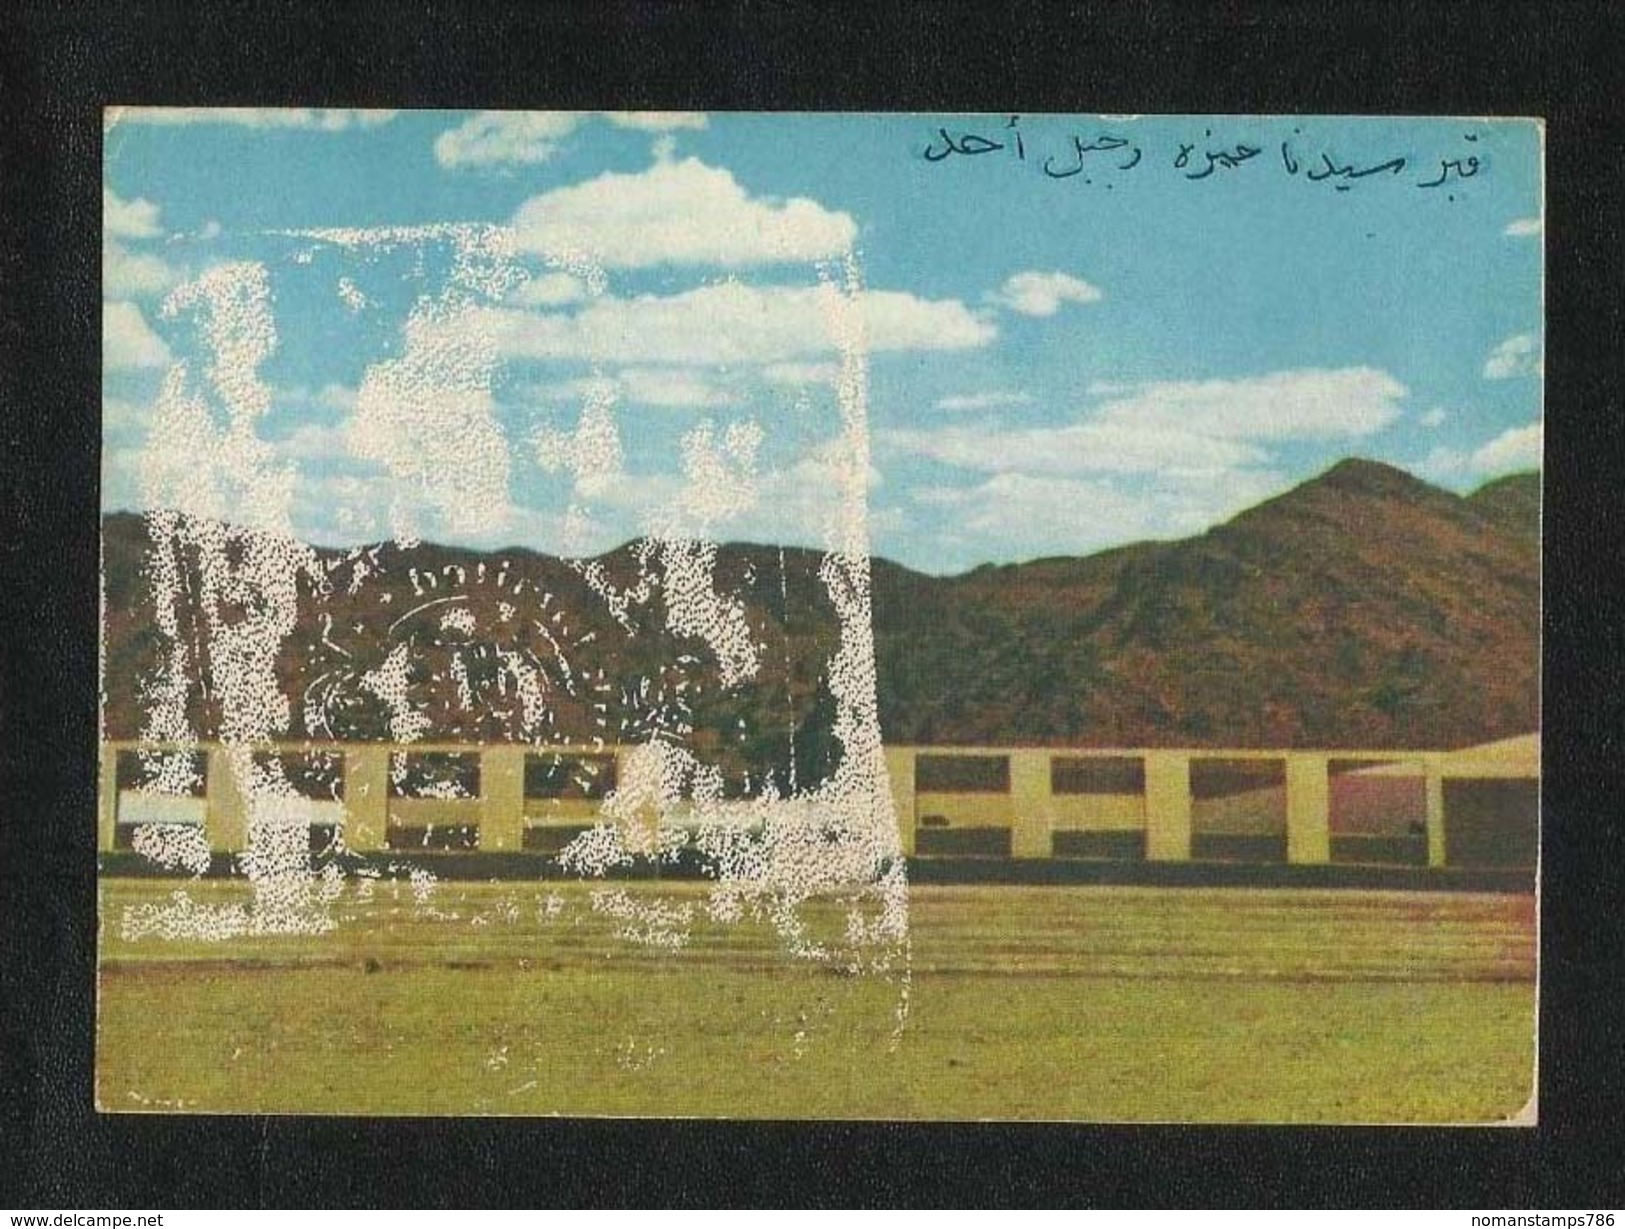 Saudi Arabia Picture Postcard Uhud Mountain Medina View Card  AS PER SCAN - Saudi Arabia